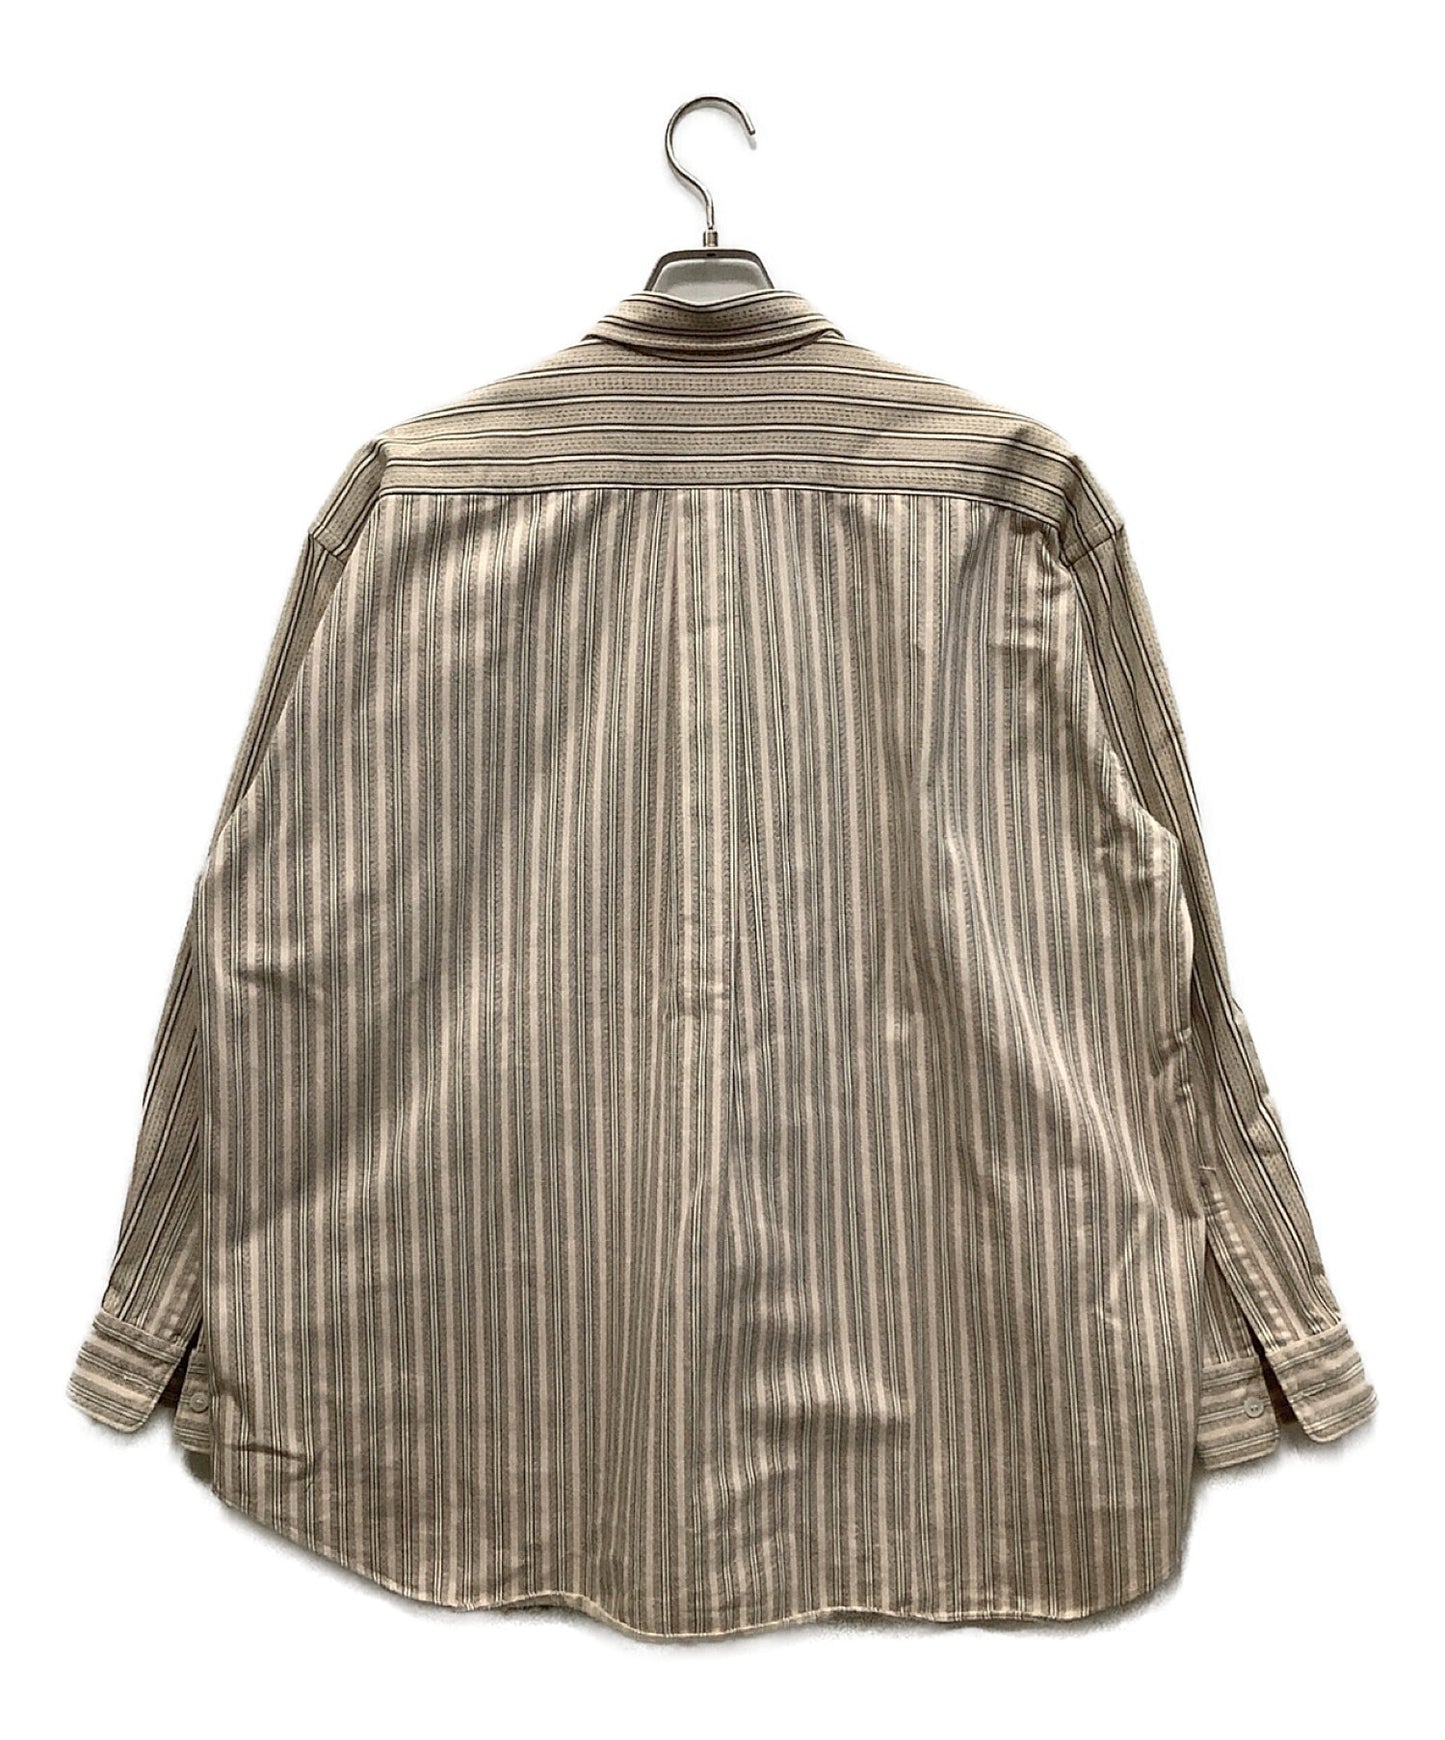 [Pre-owned] COMME des GARCONS HOMME oversize shirt HB-040130